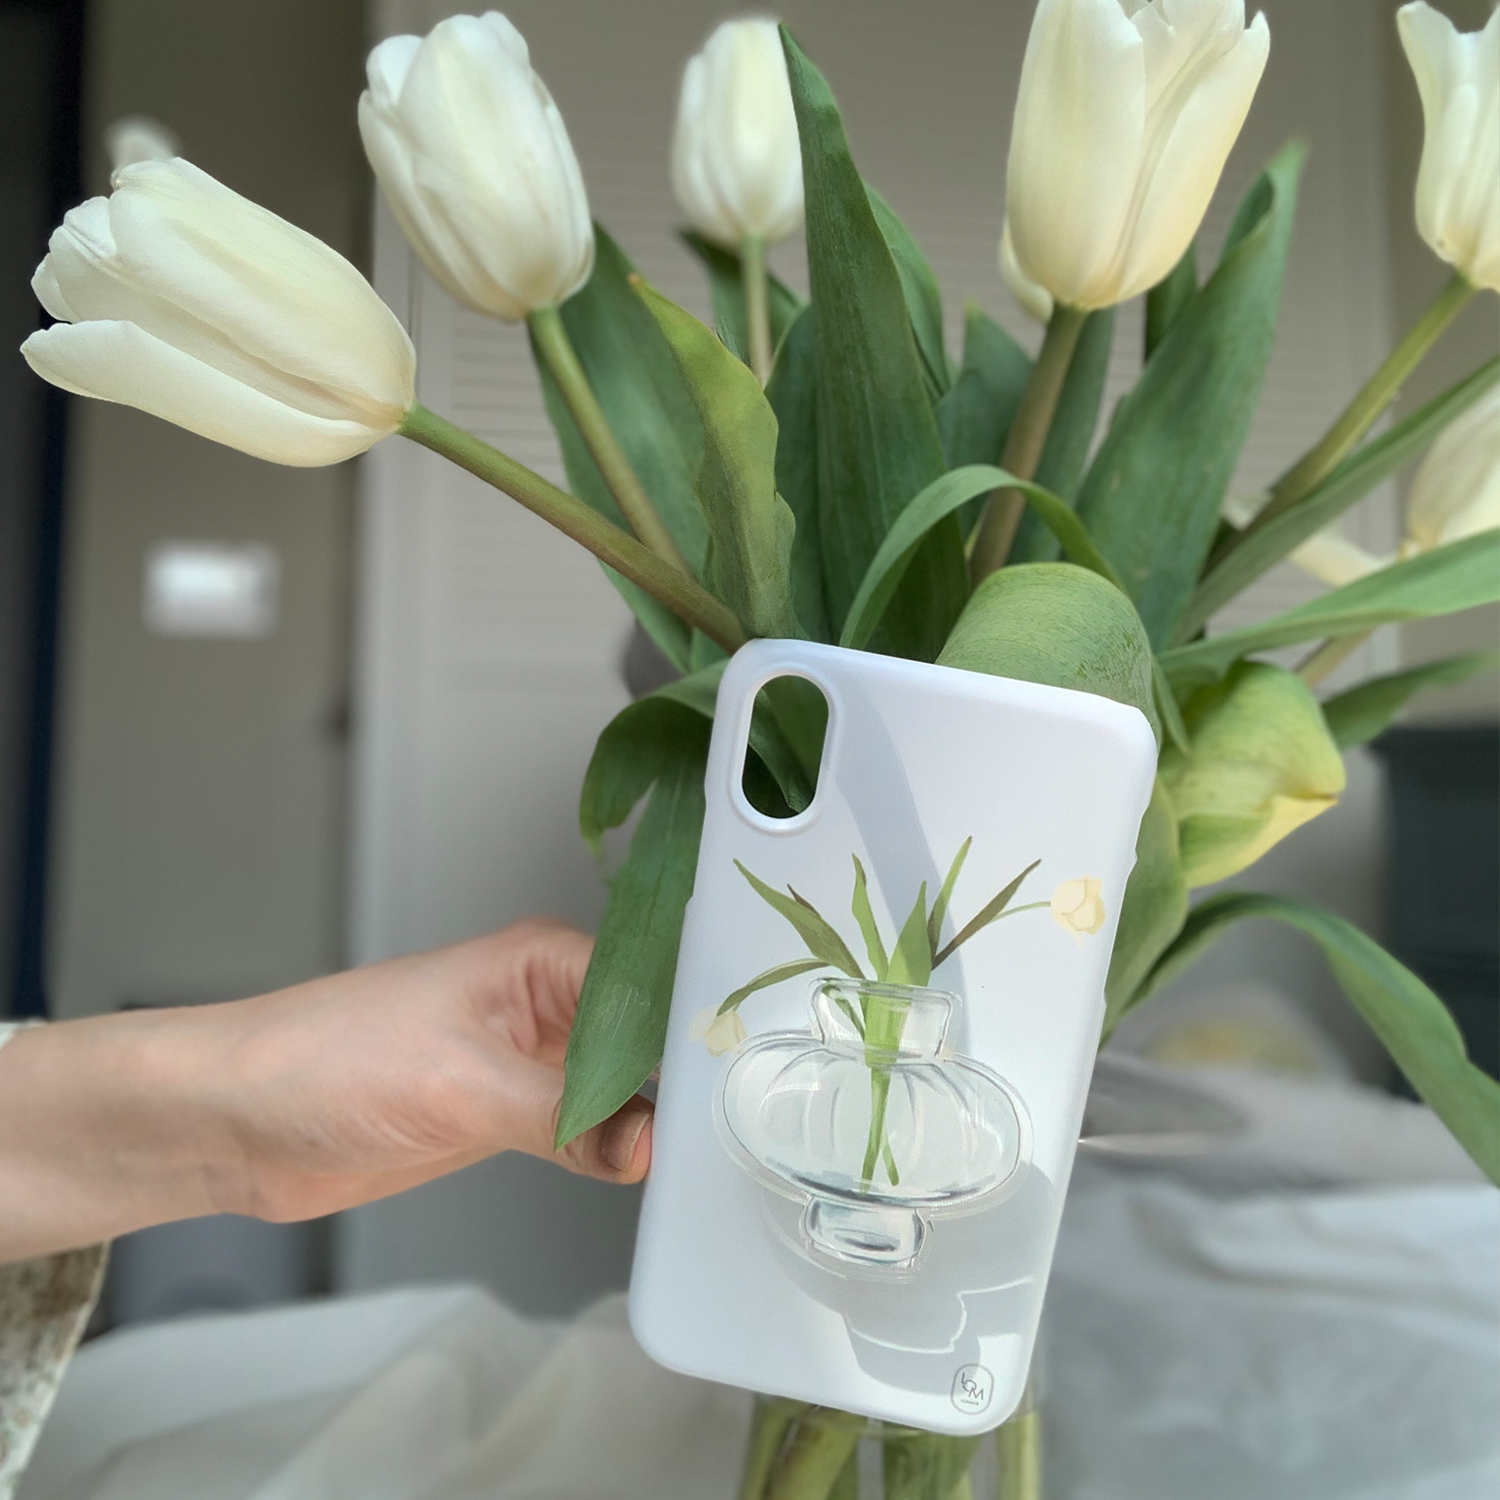 [SET] Bouquet series : Tulip phone case + griptok